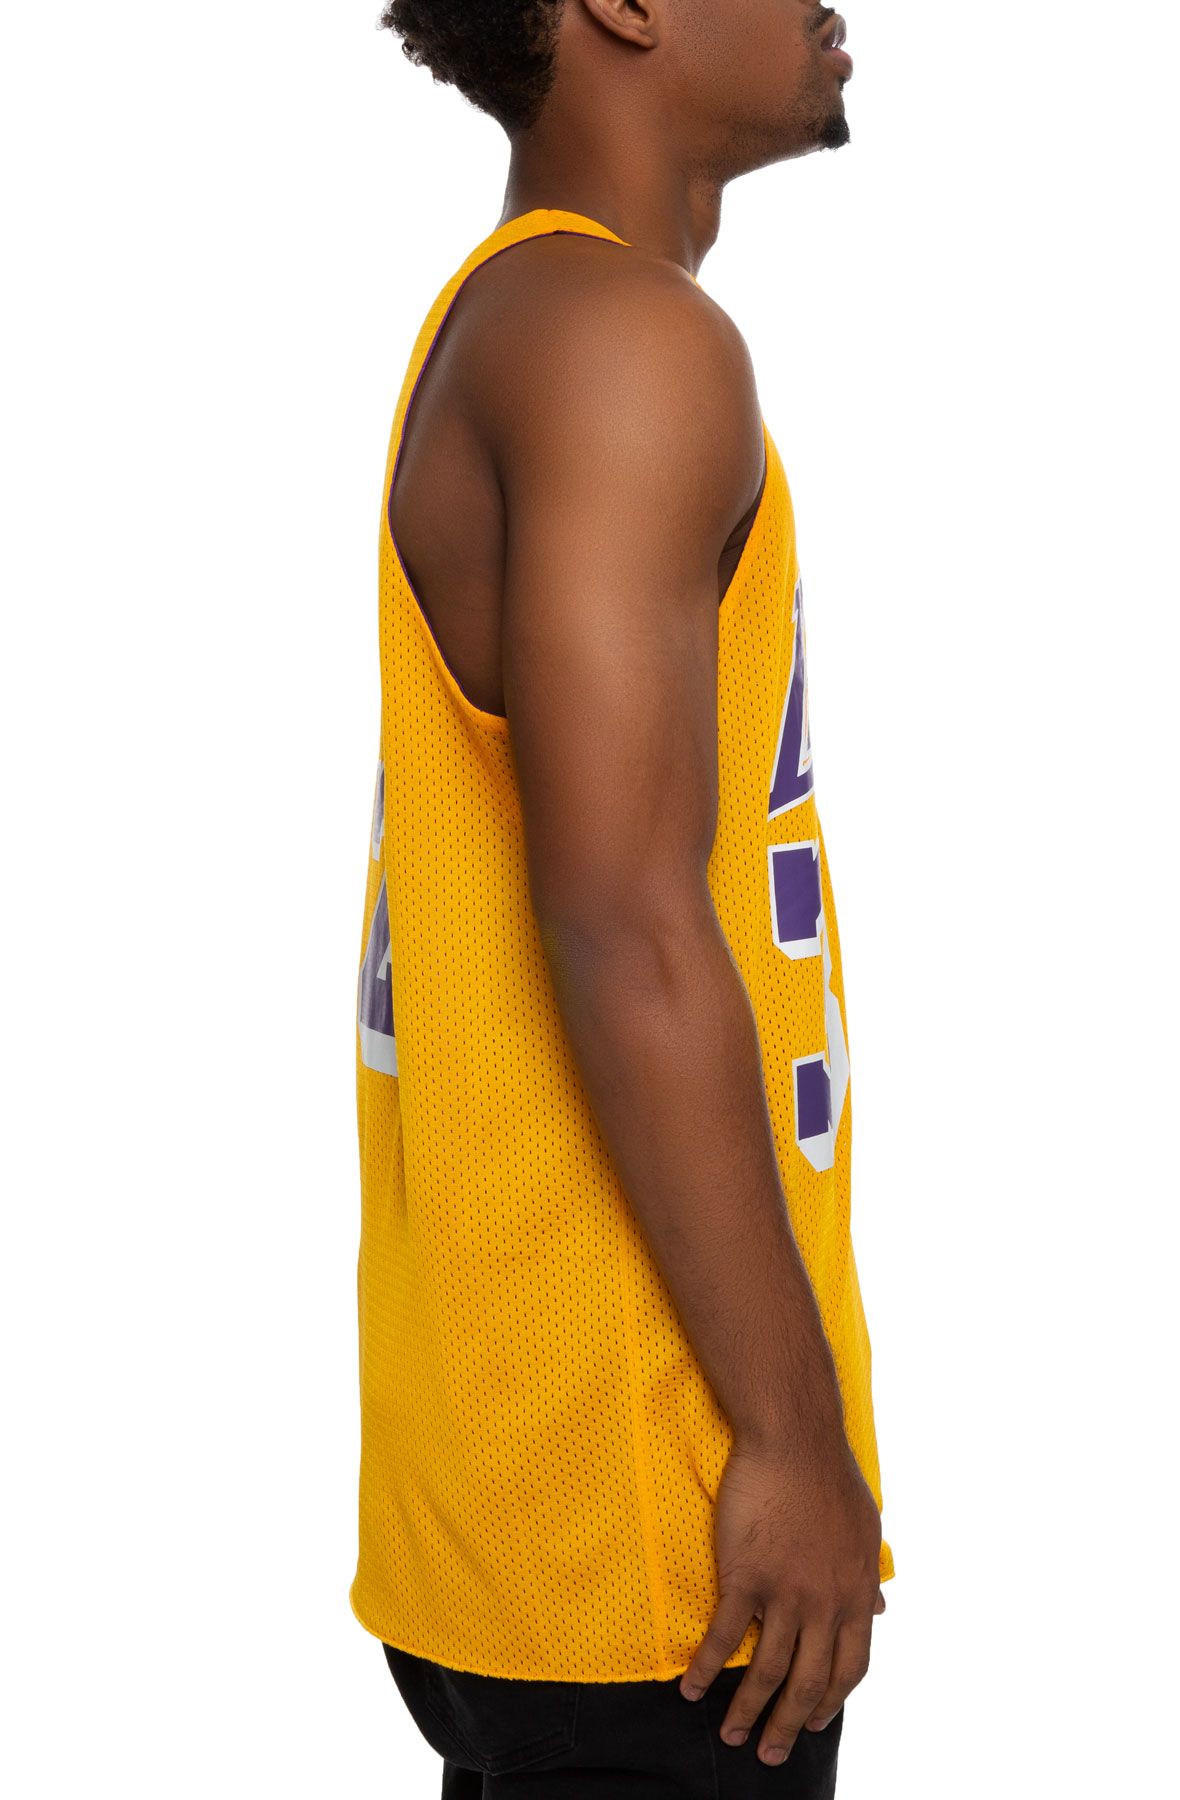 Mitchell & Ness Lakers Reversible Mesh Jersey